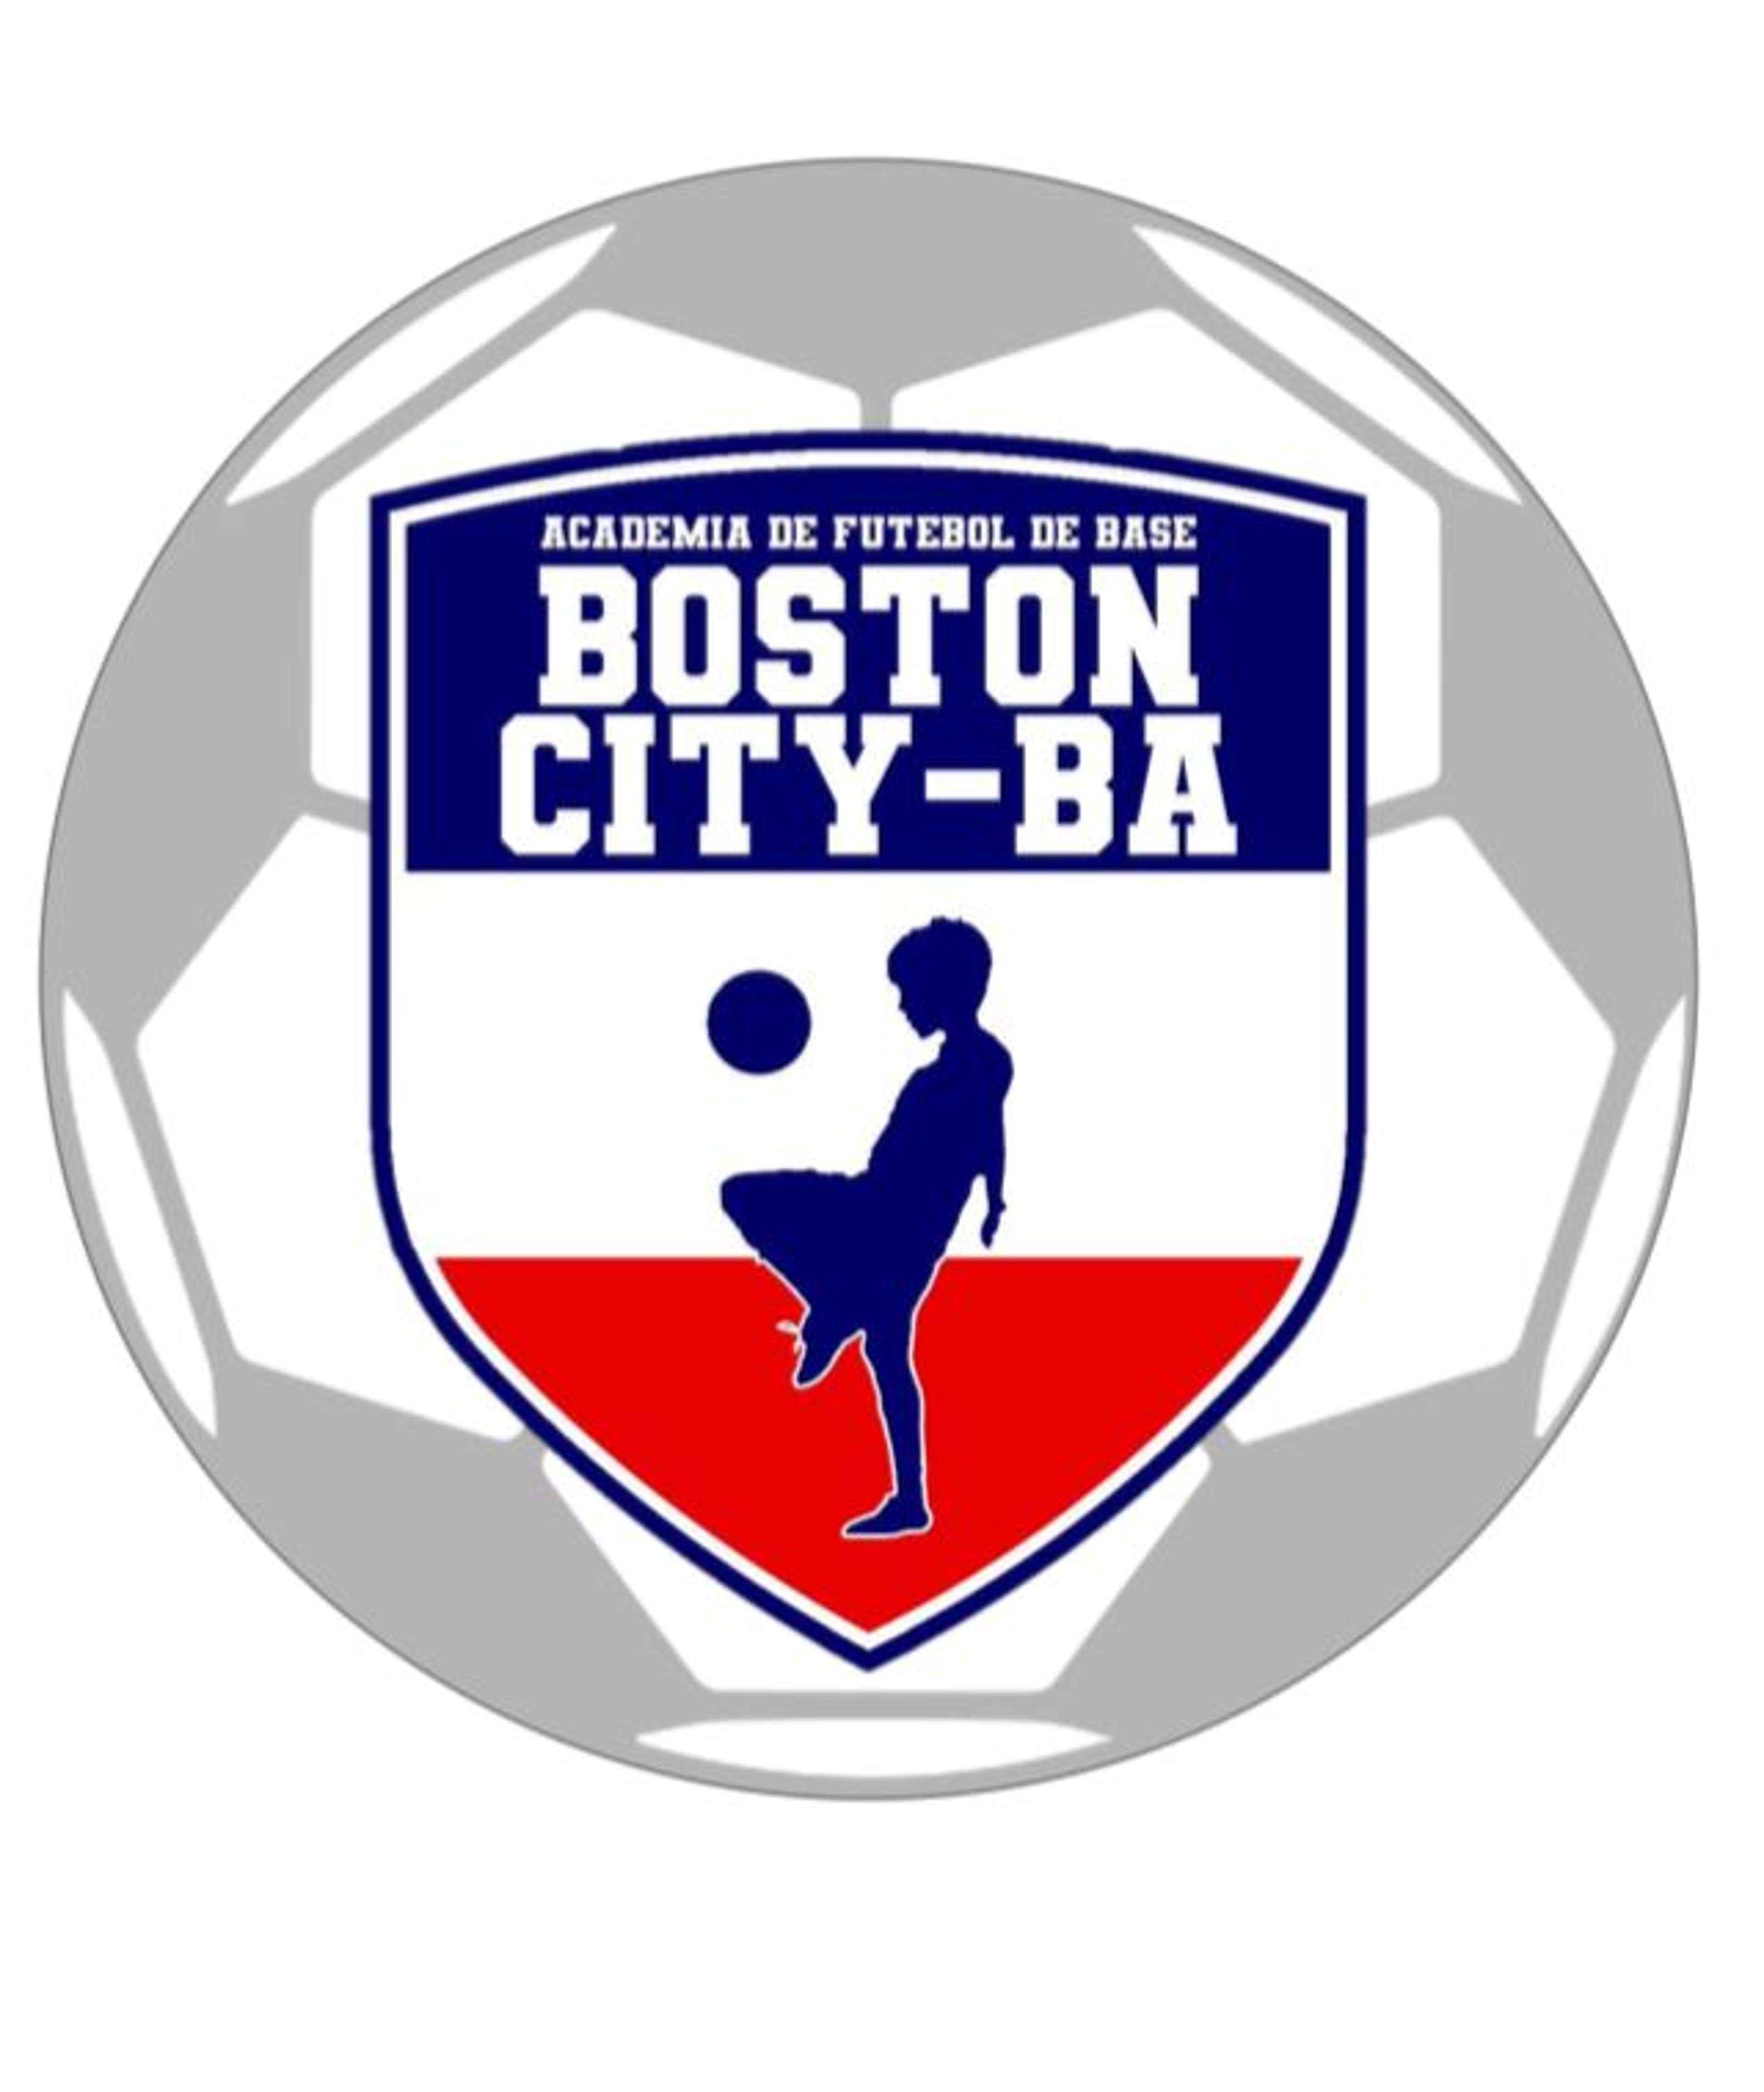 Boston City FC Brasil